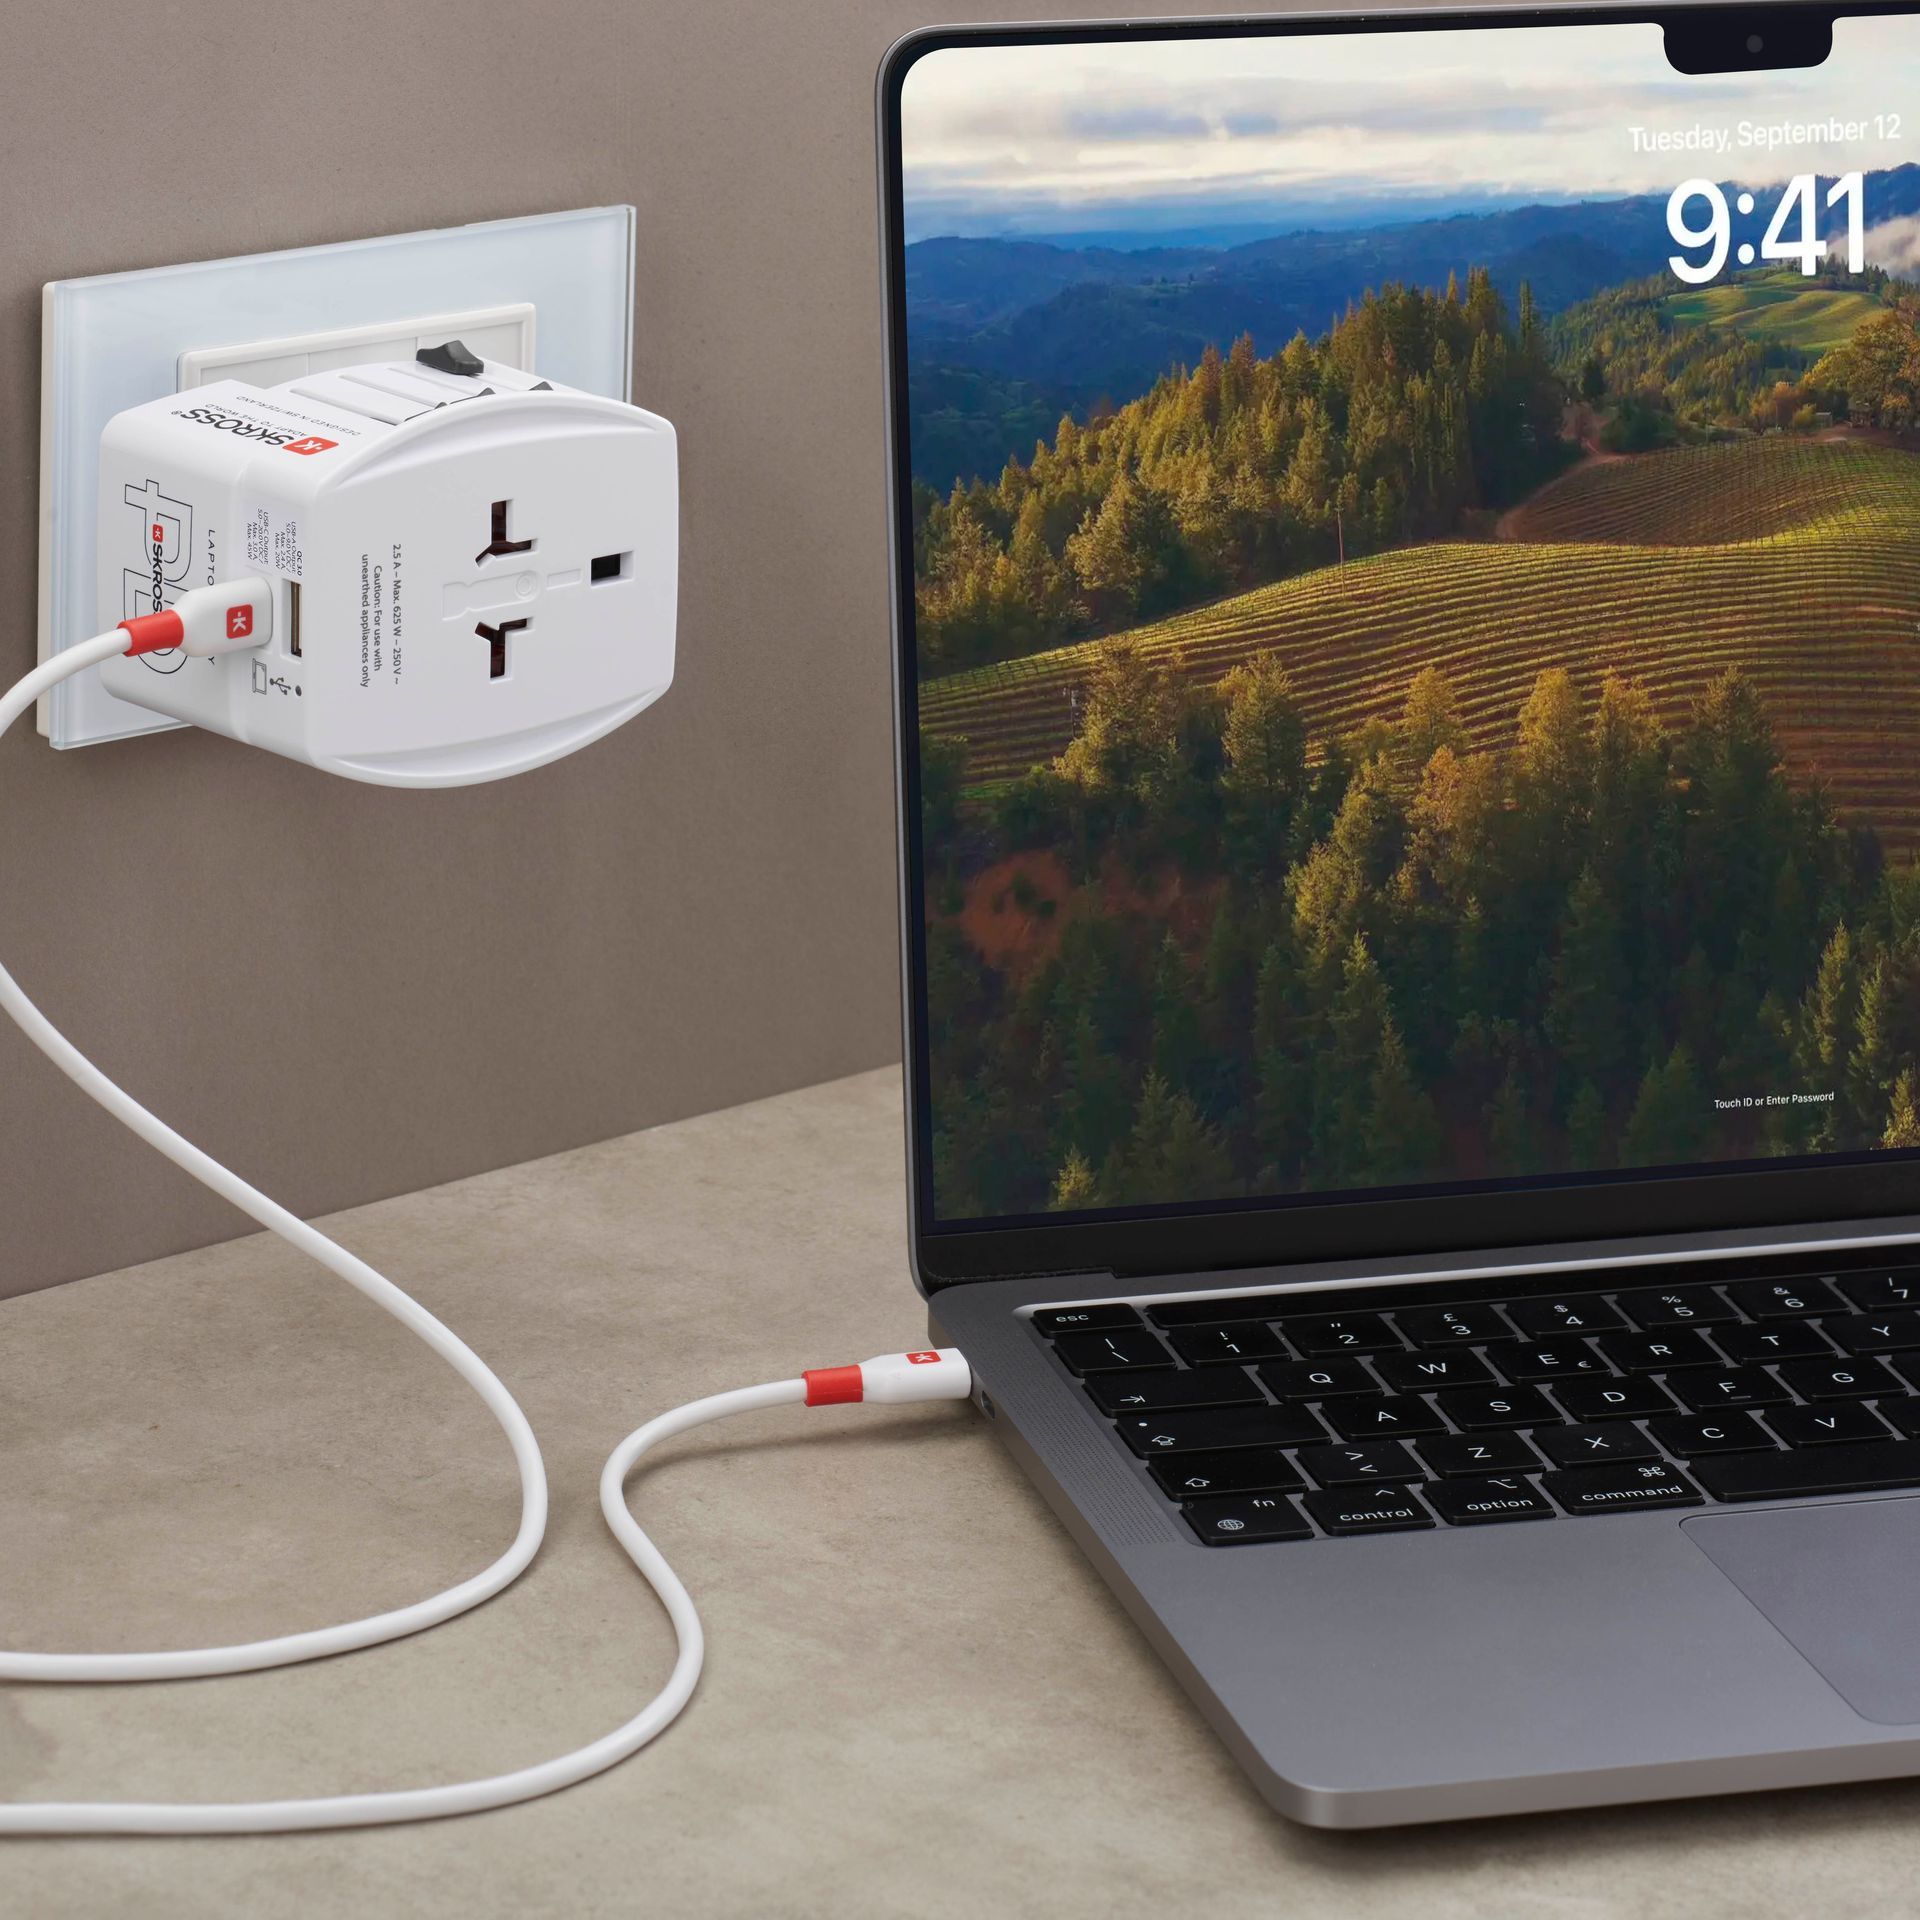 Skross 2-Pole MUV USB AC65PD Travel Adapter charging a laptop SKR-0245